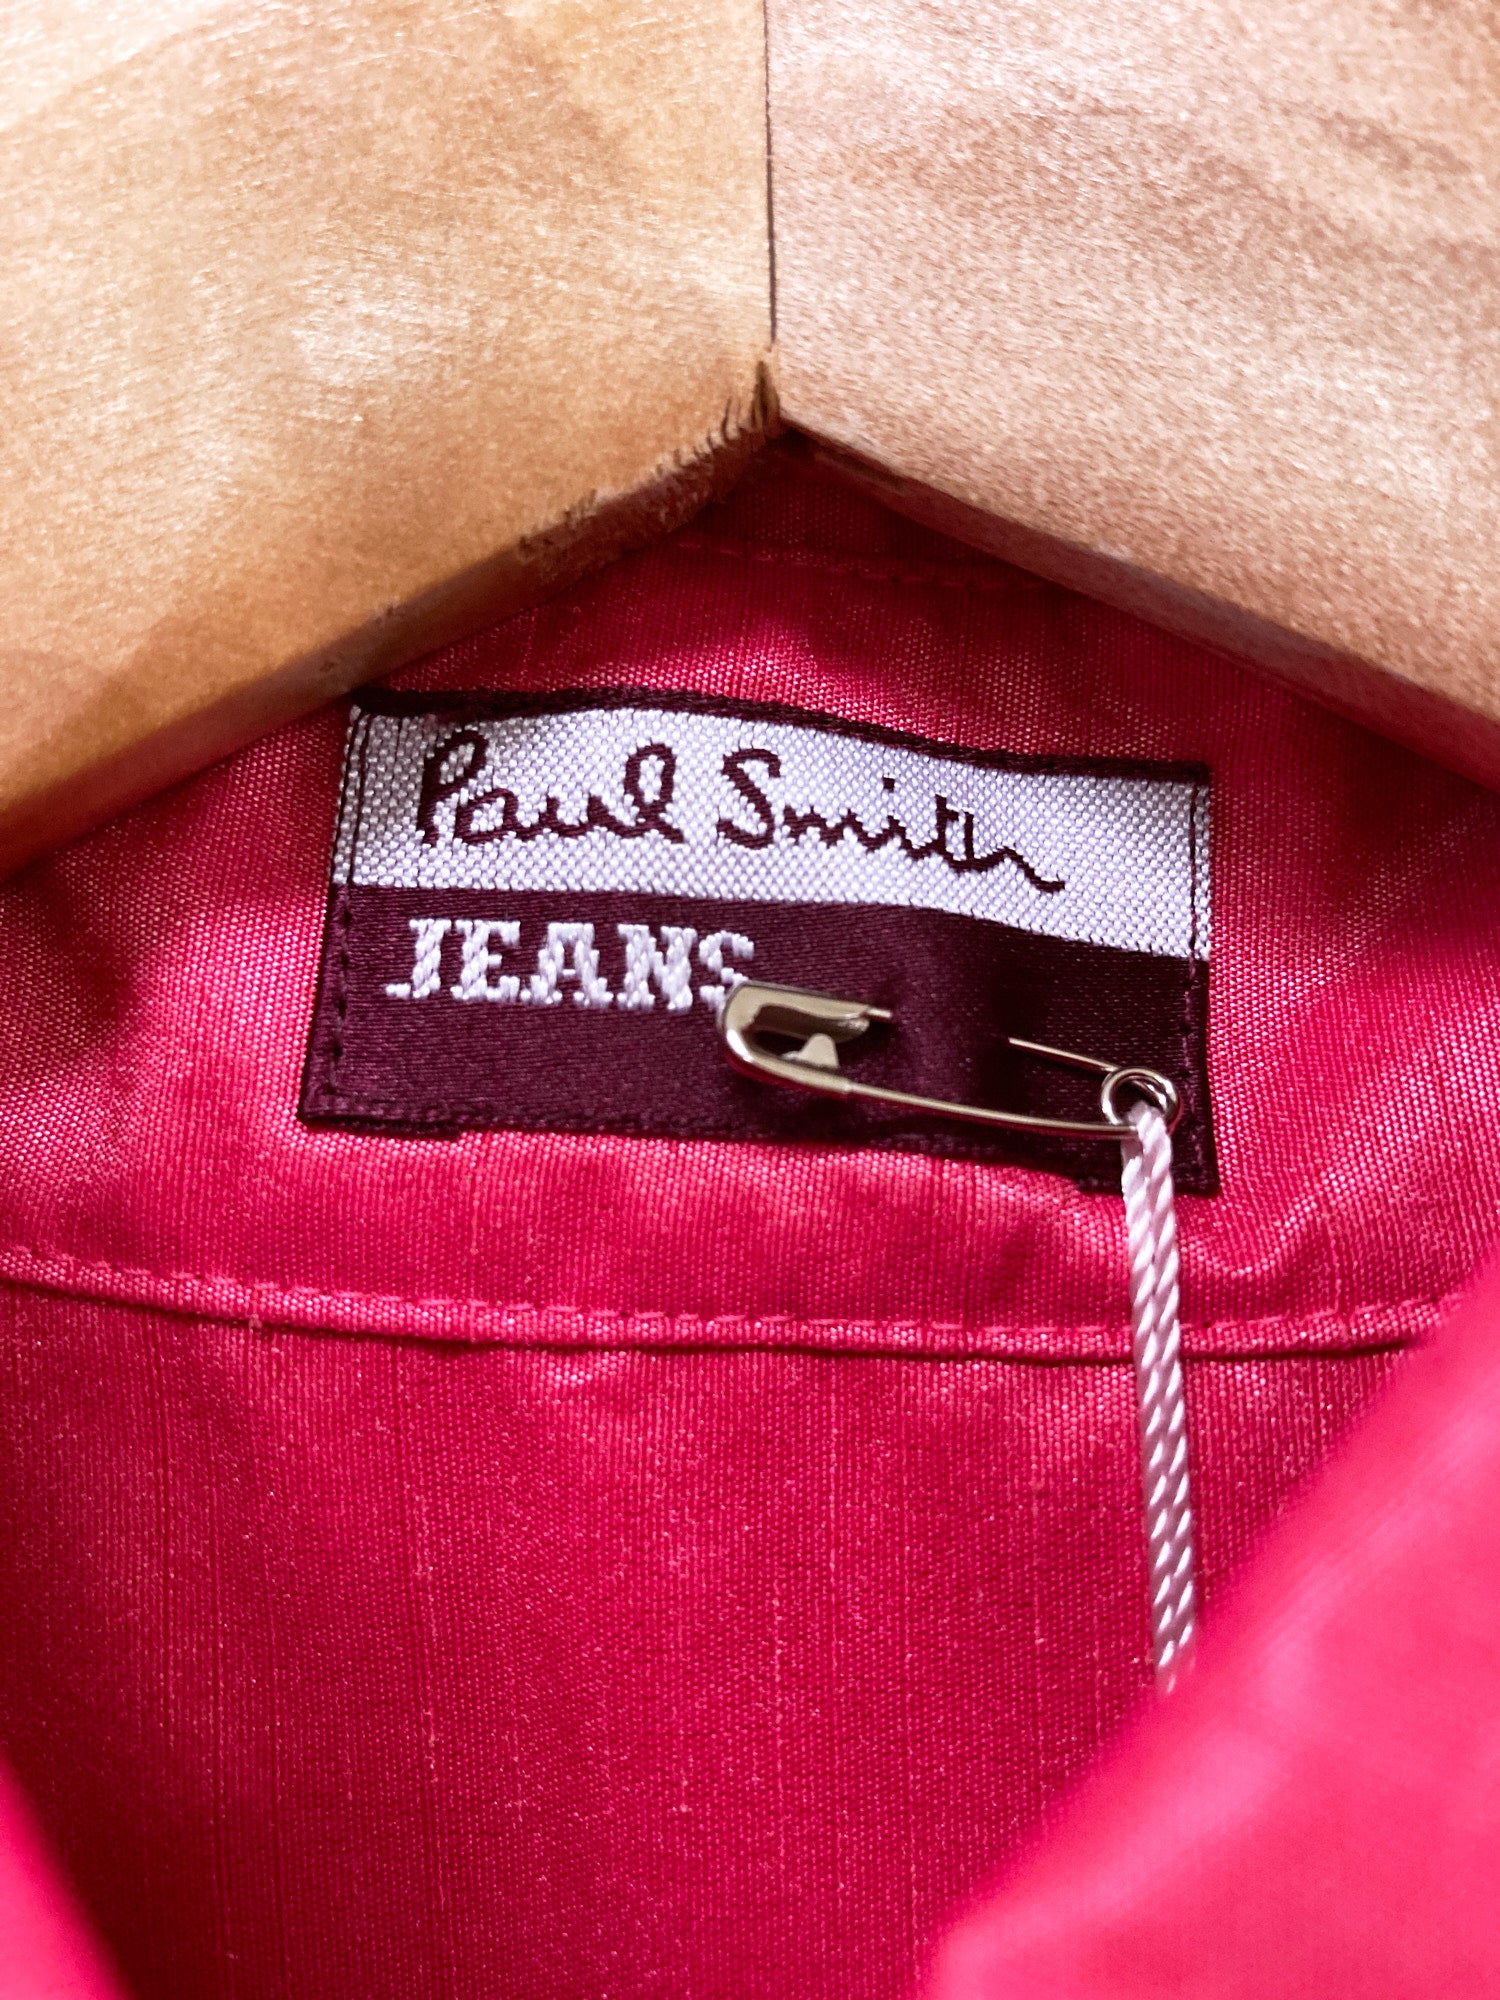 Paul Smith Jeans 1990s shiny polyester dupion short sleeve shirt - size 40